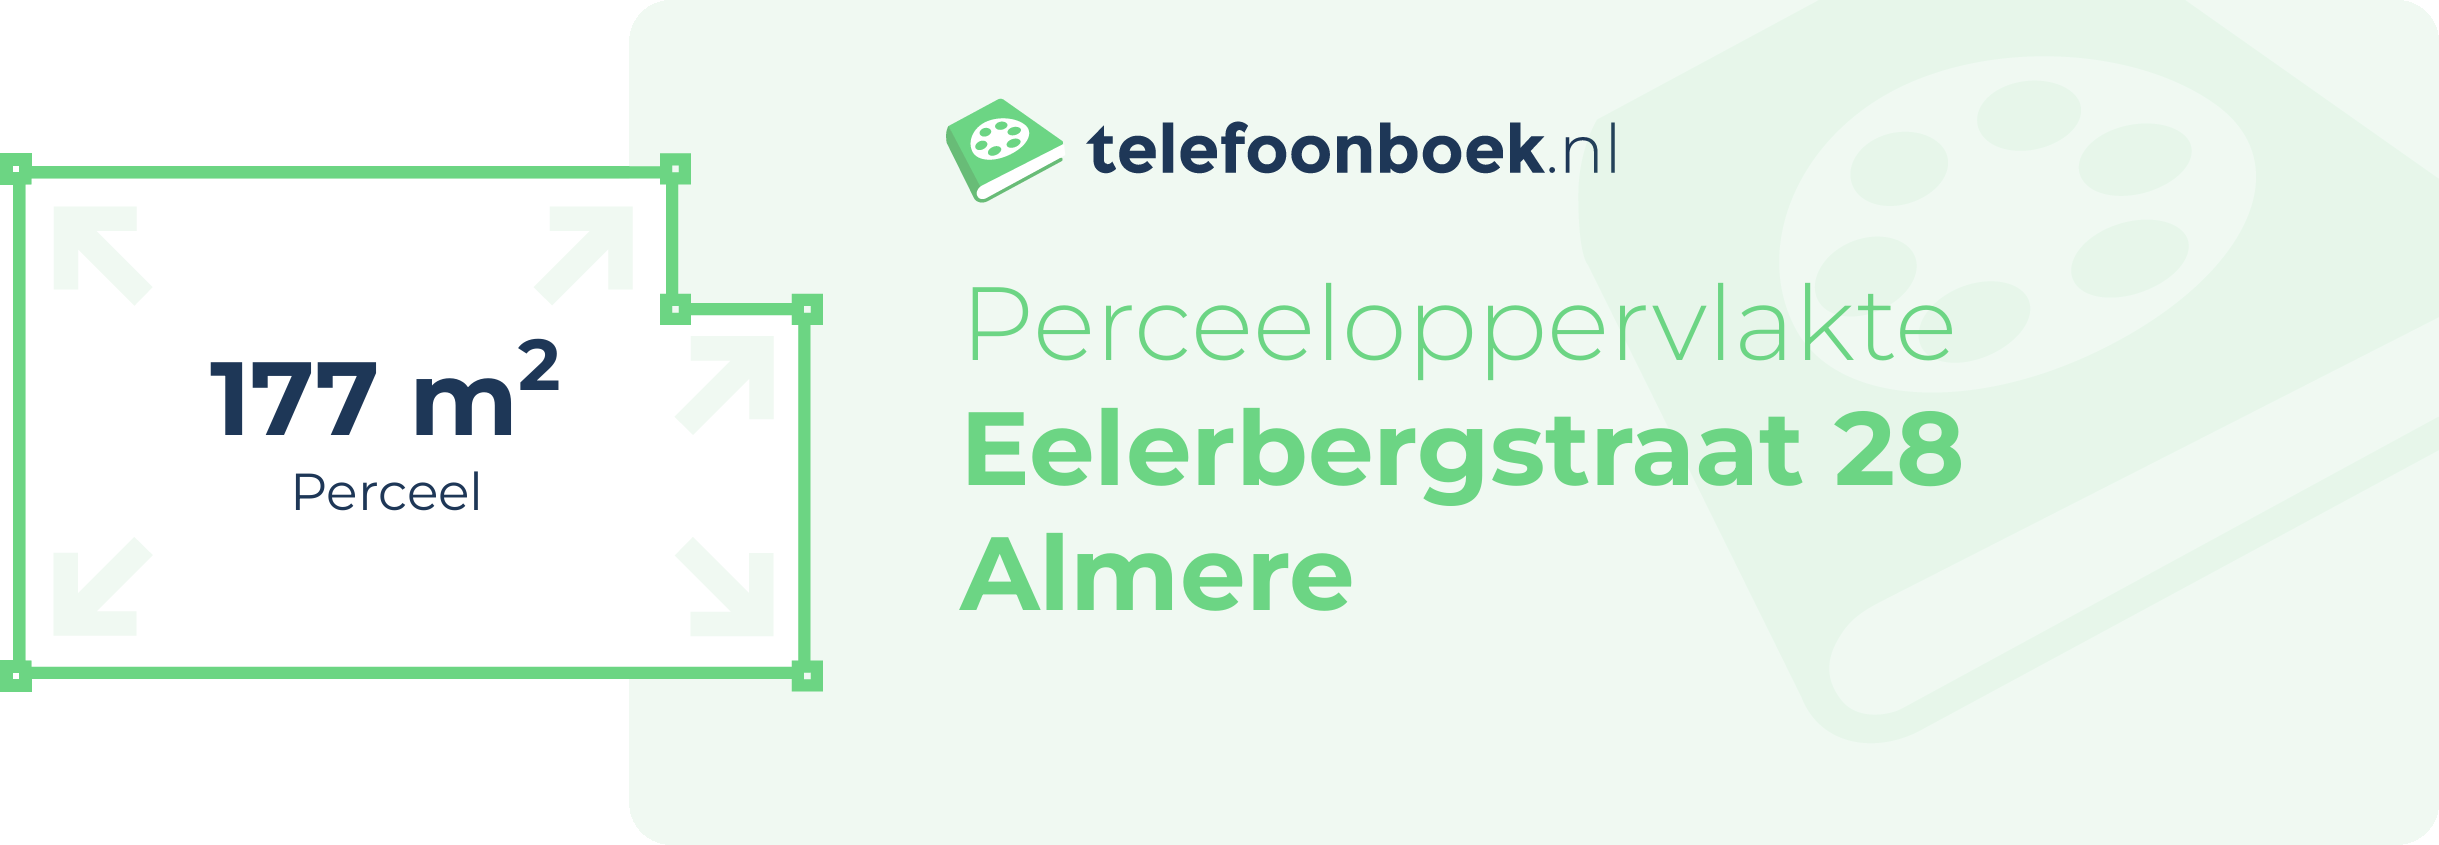 Perceeloppervlakte Eelerbergstraat 28 Almere